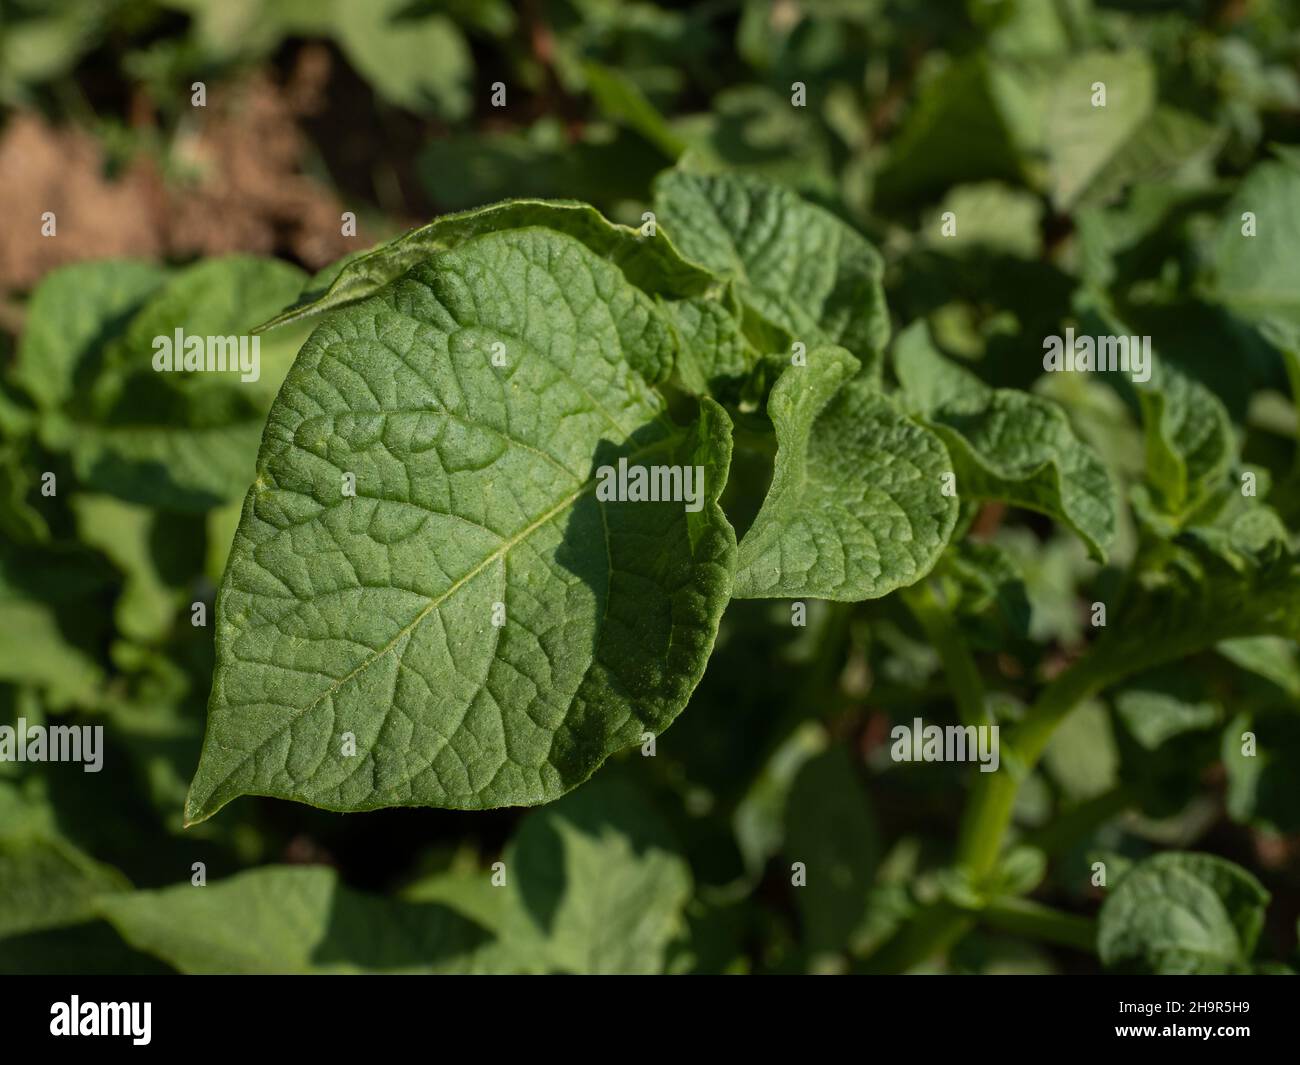 Detail of the leaf of a potato plant (Solanum tuberosum). Stock Photo